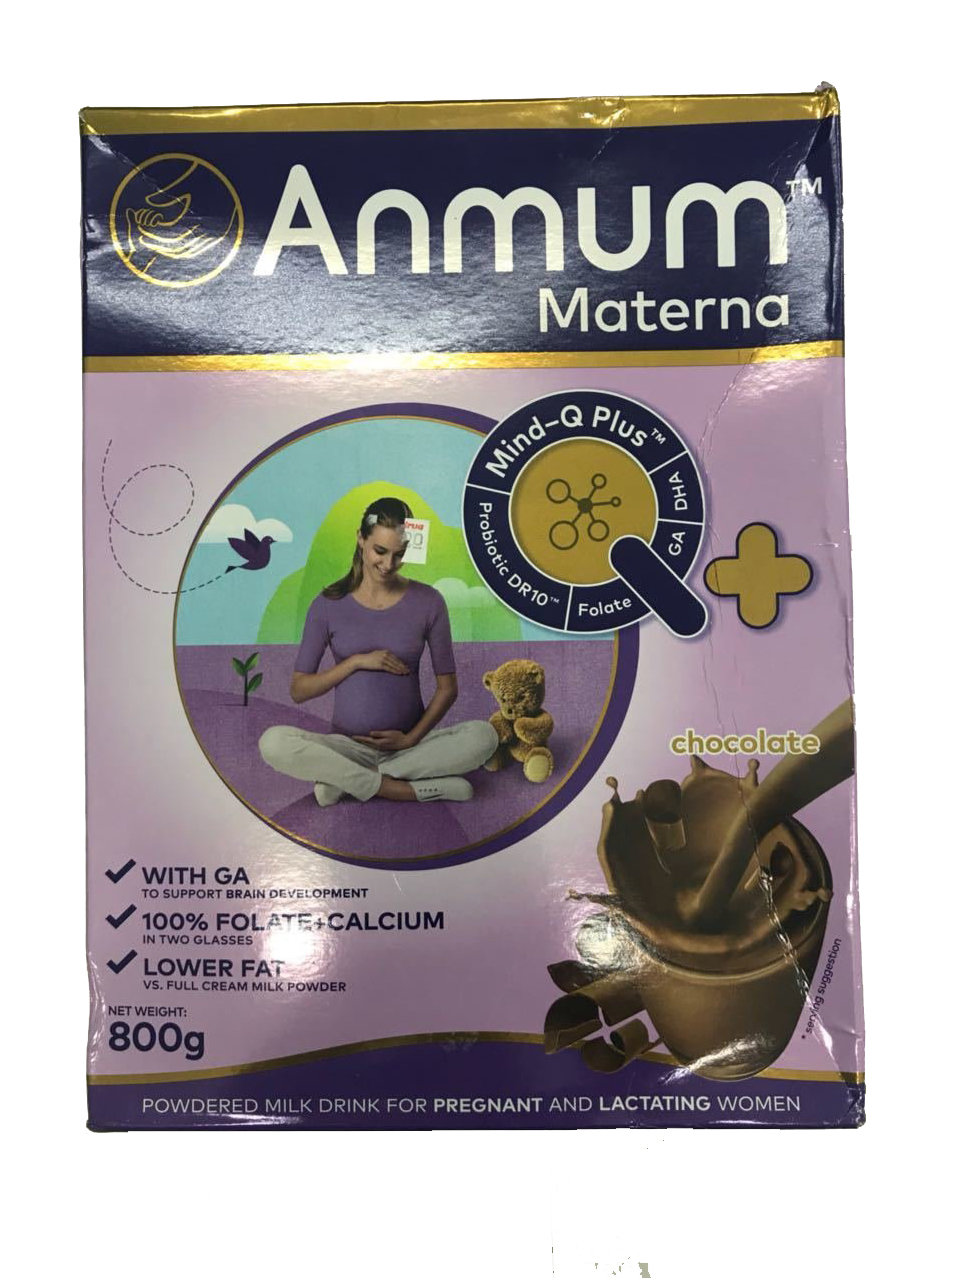 Anmum Maternal - 800g - Chocolate